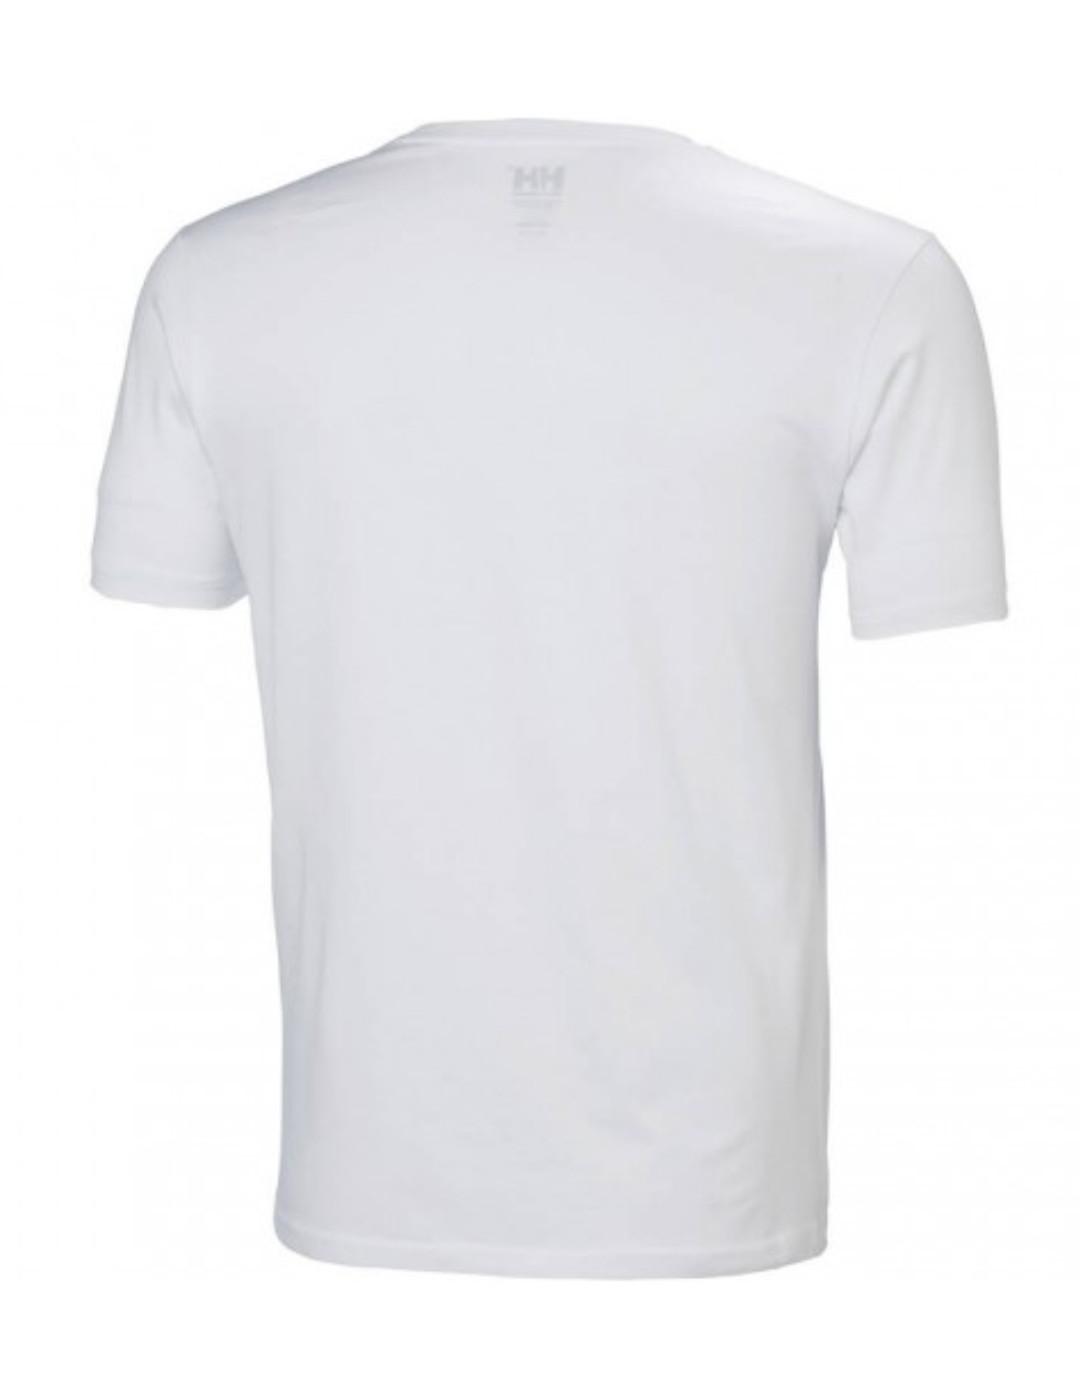 Camiseta Helly Hansen Logo blanca manga corta para hombre